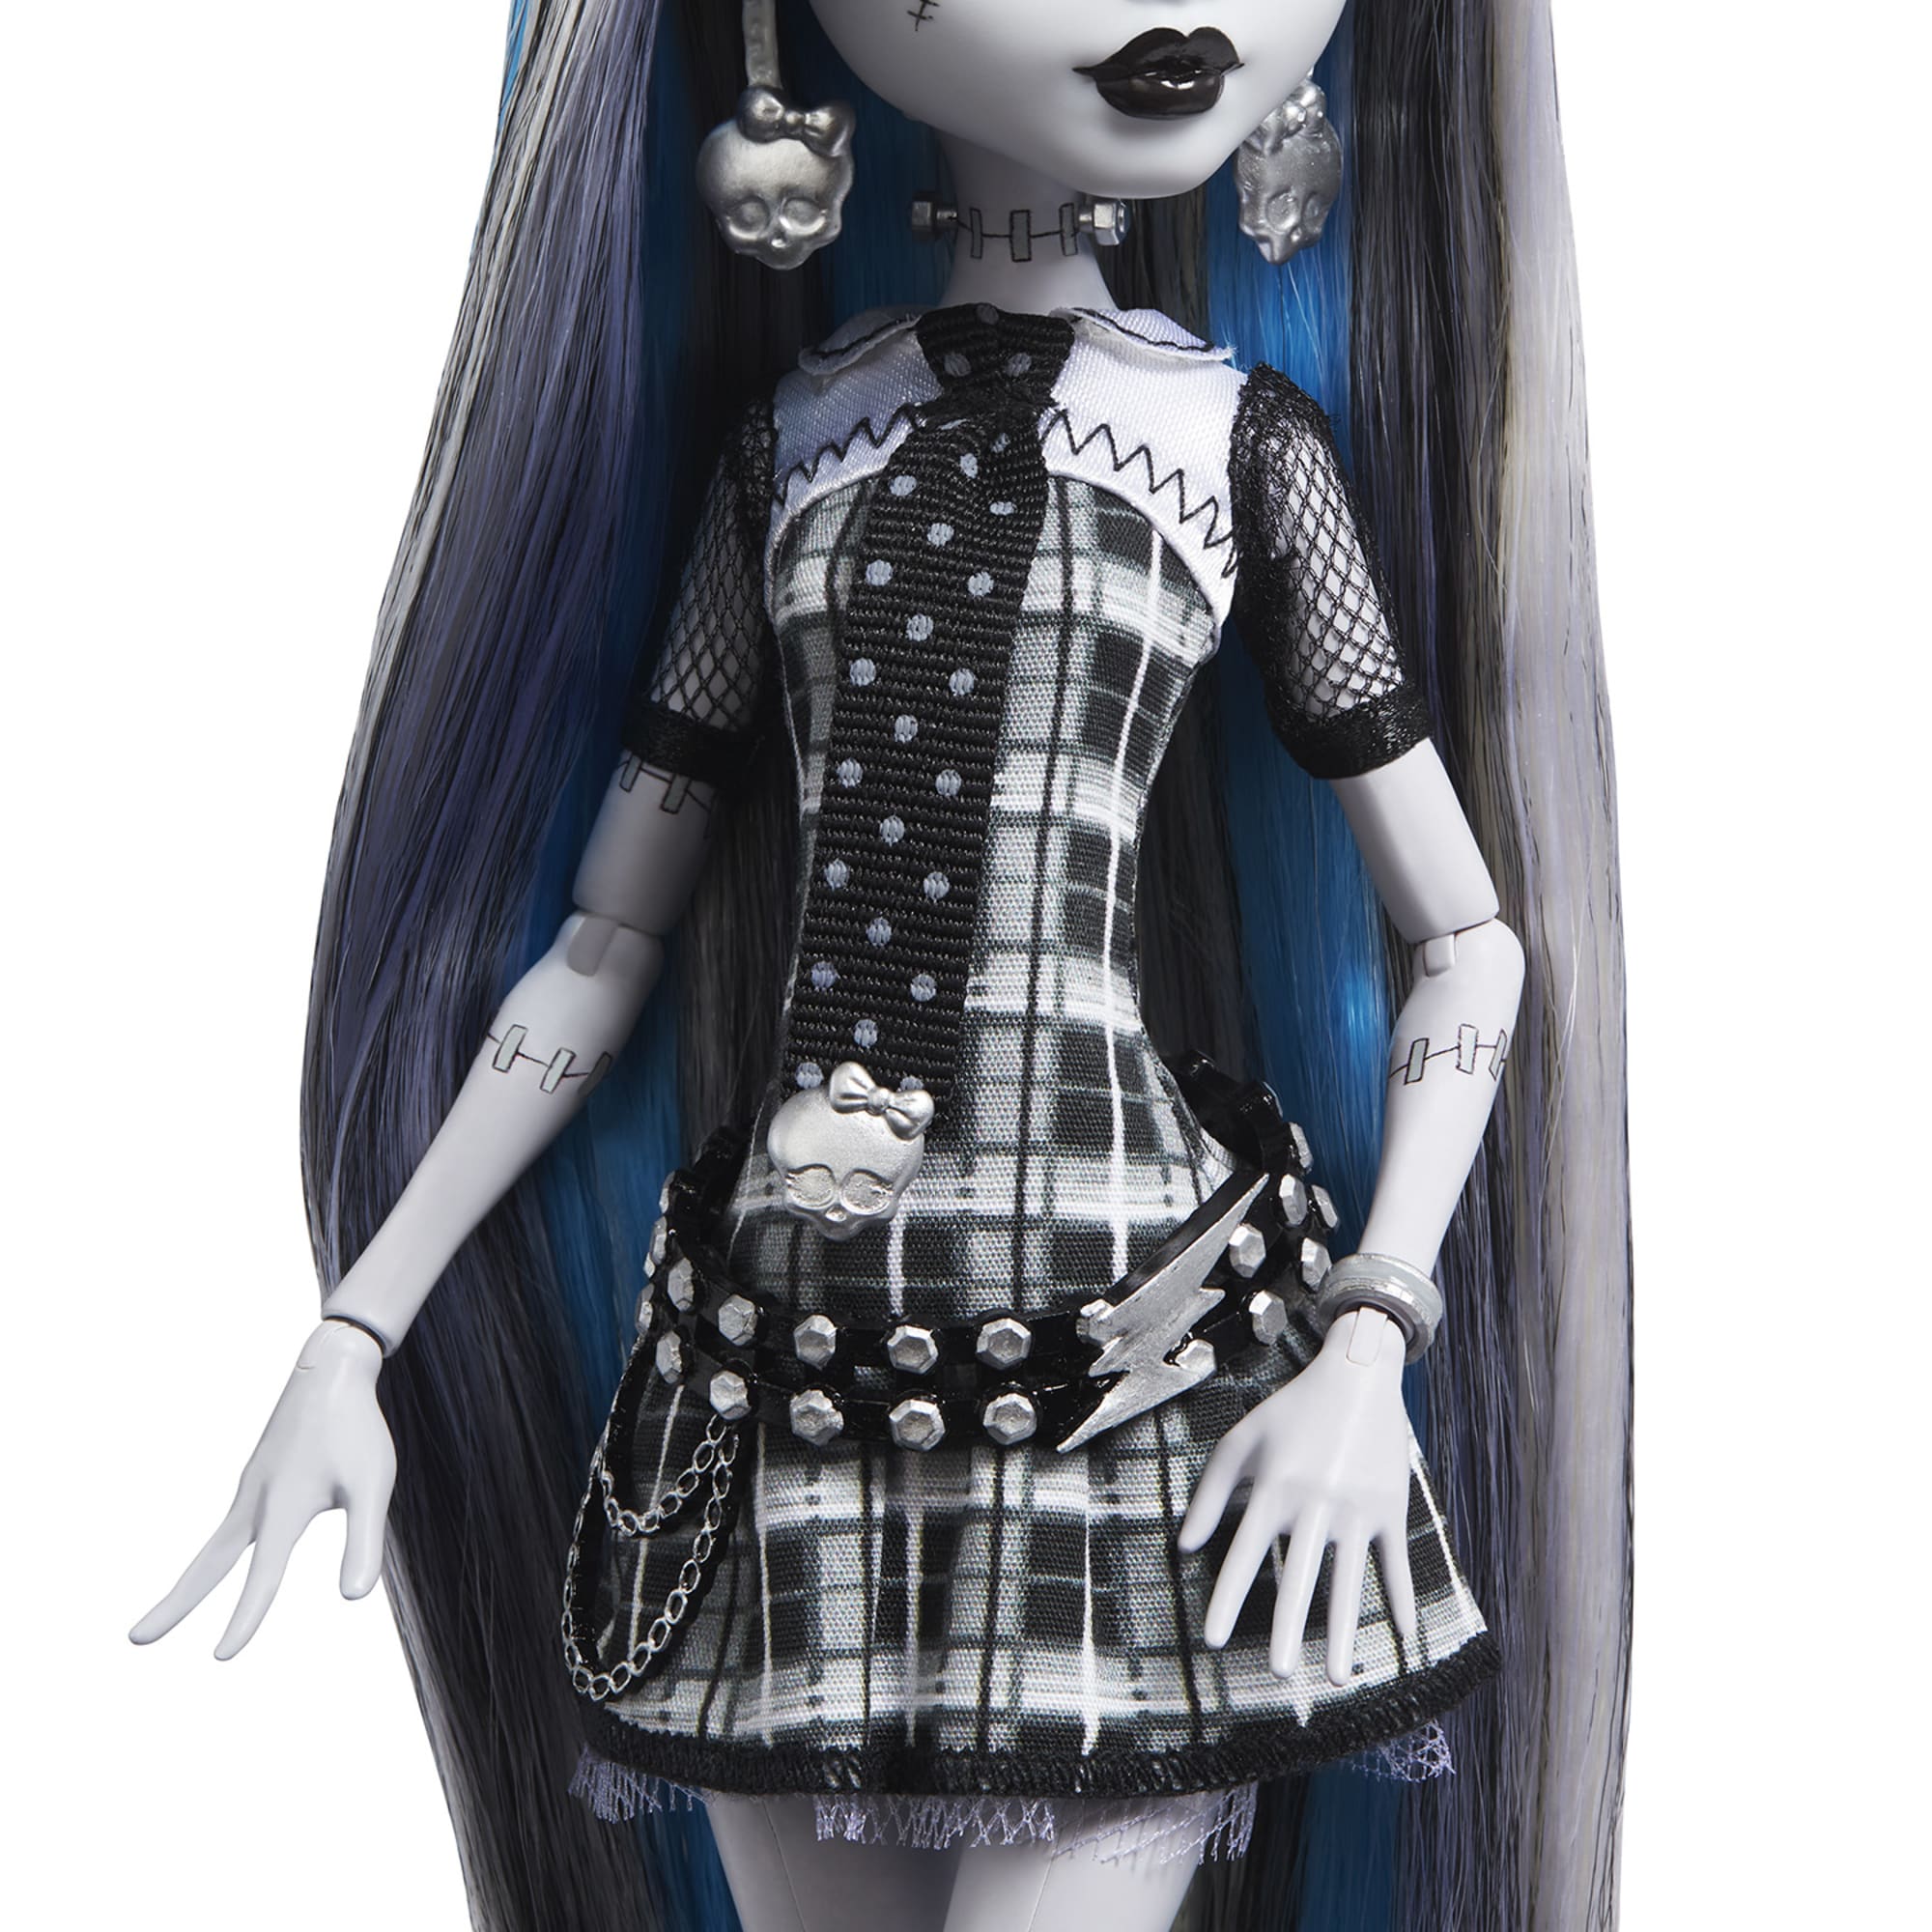 Monster High Reel Drama Frankie Stein Doll – Mattel Creations